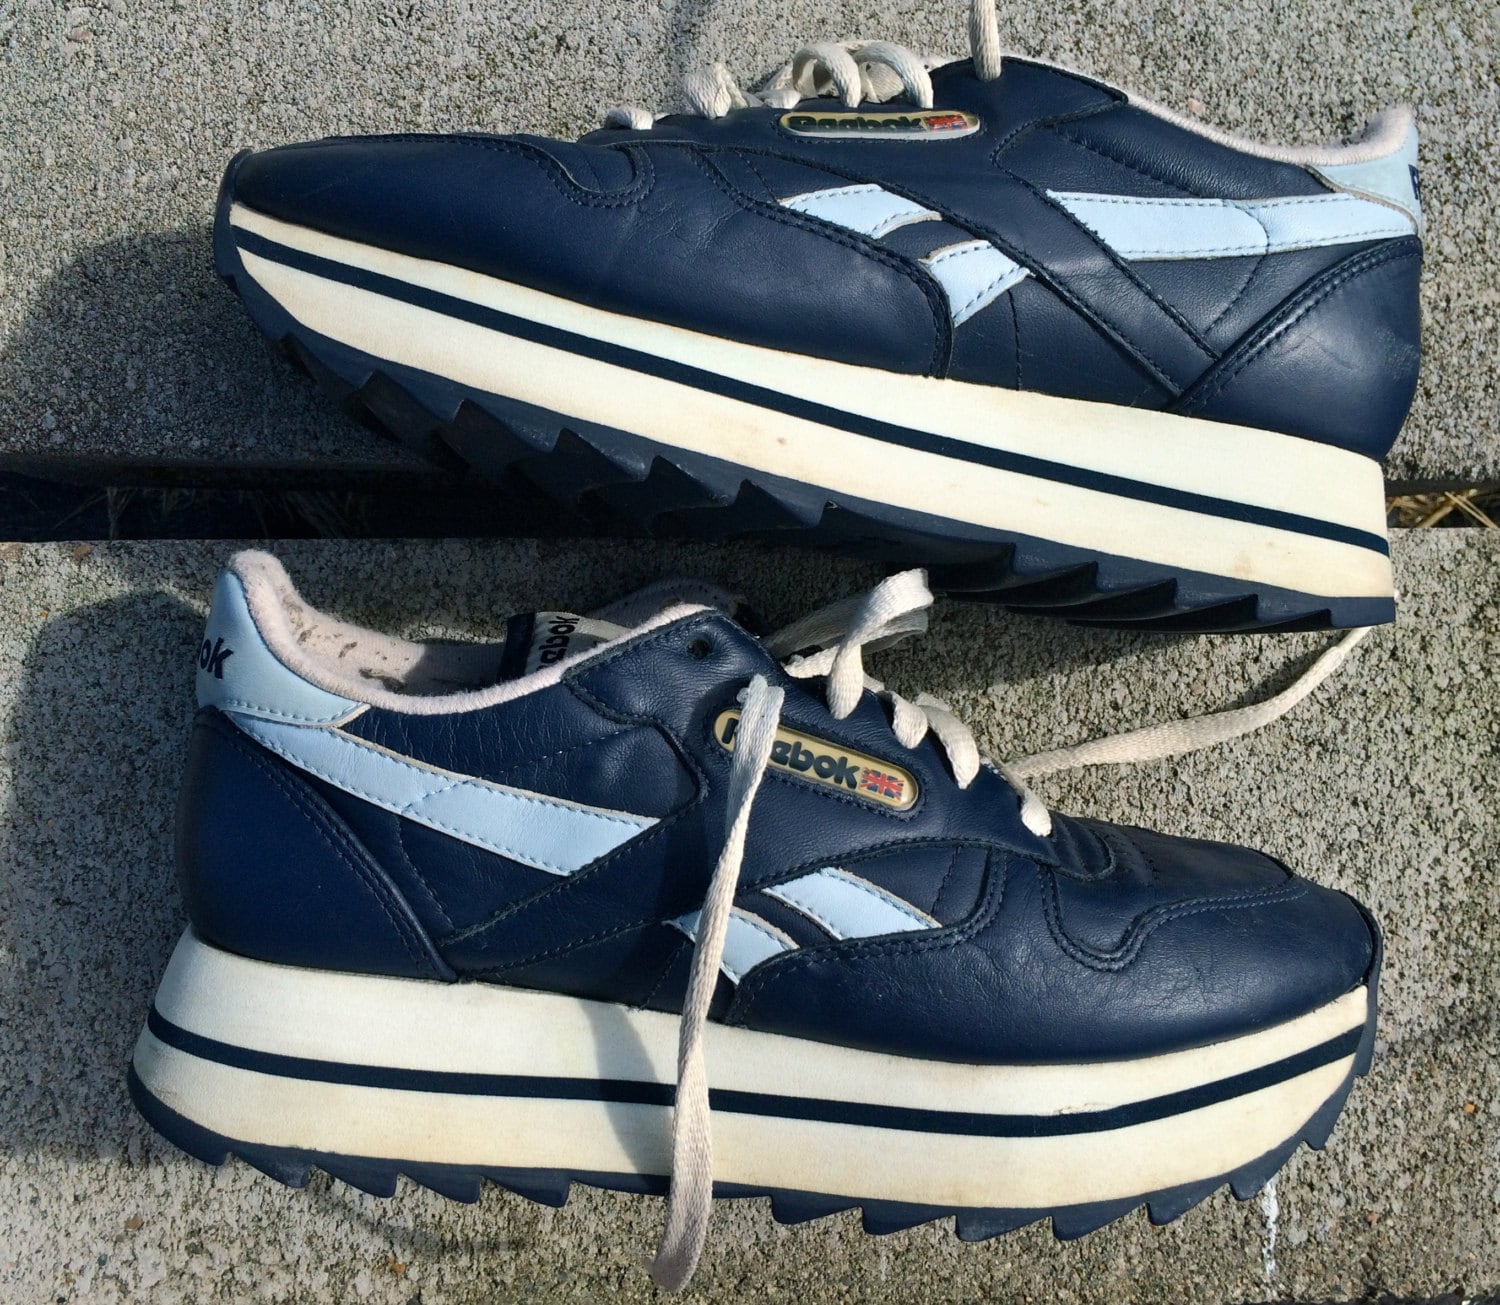 Vintage Reebok Platform Tennis Shoes 1980s Navy and